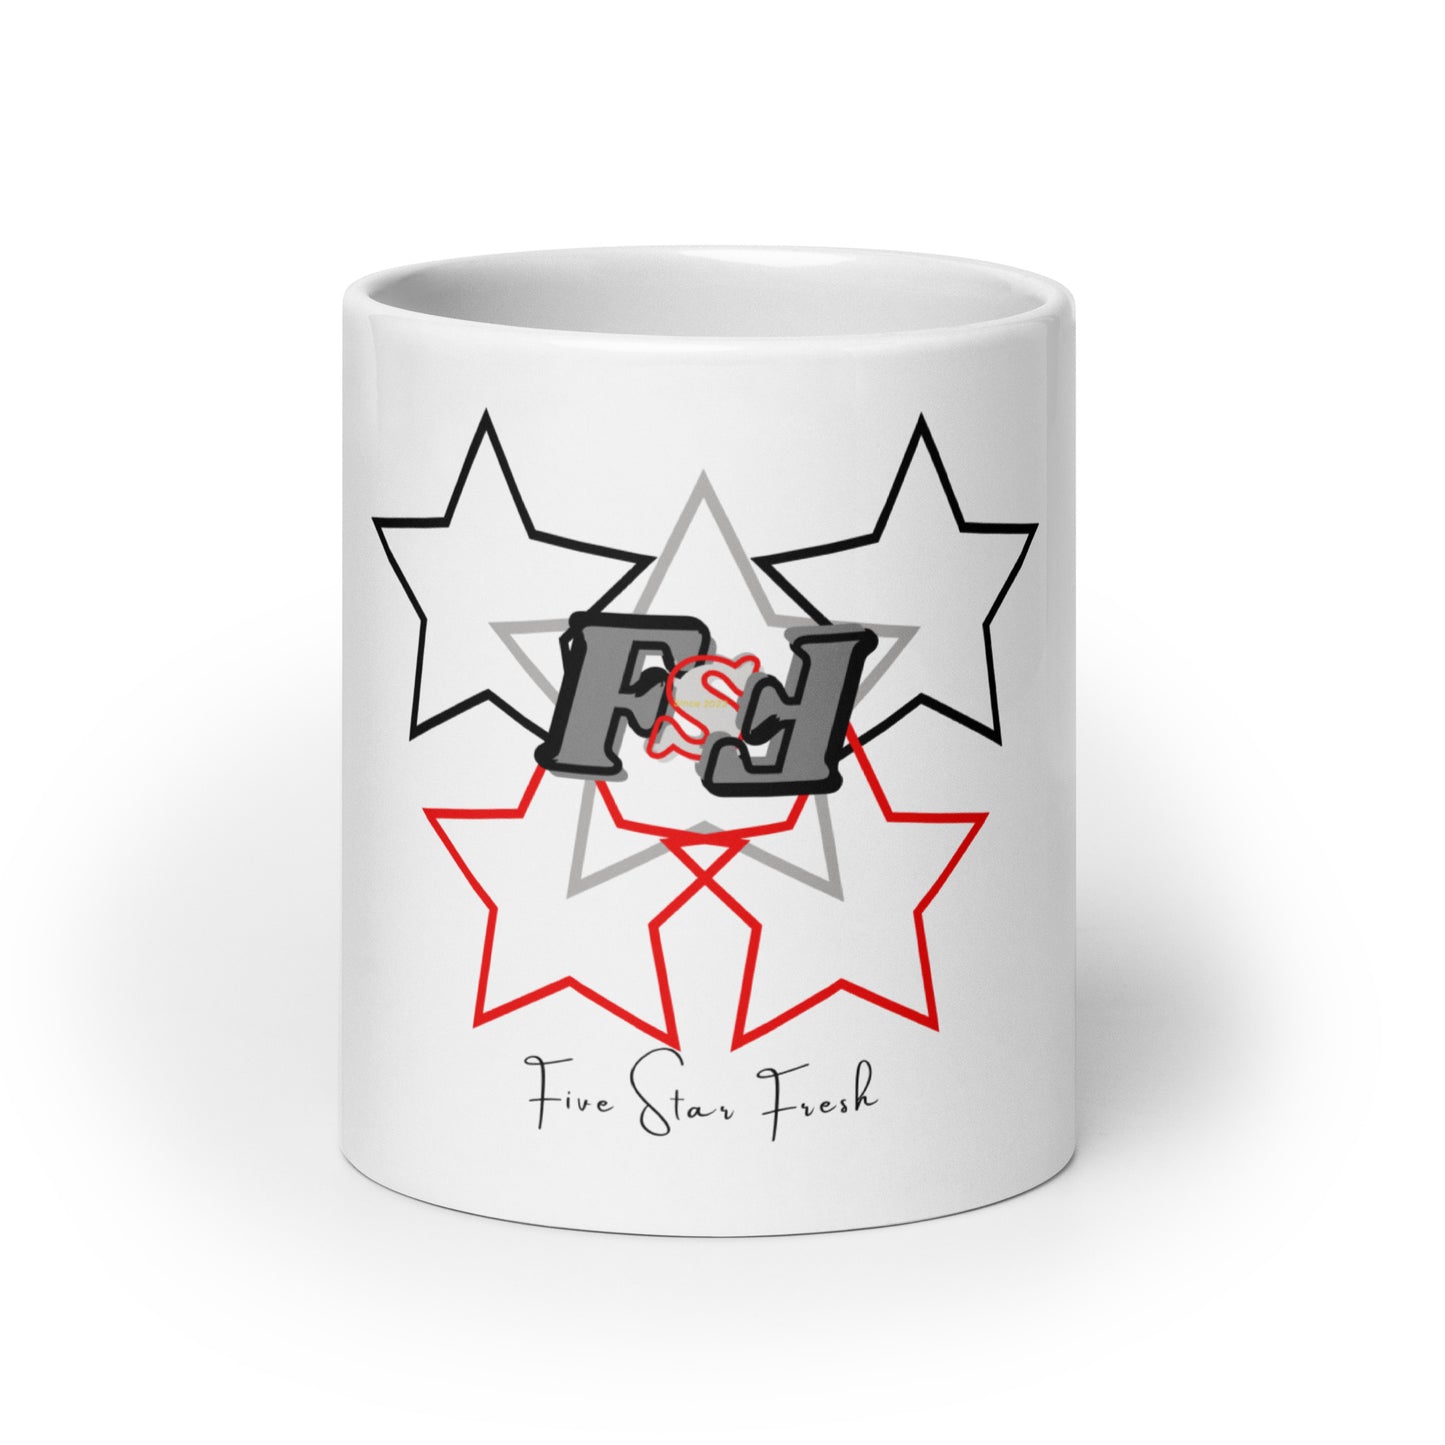 'Starz' Dark - Five Star Fresh White glossy mug